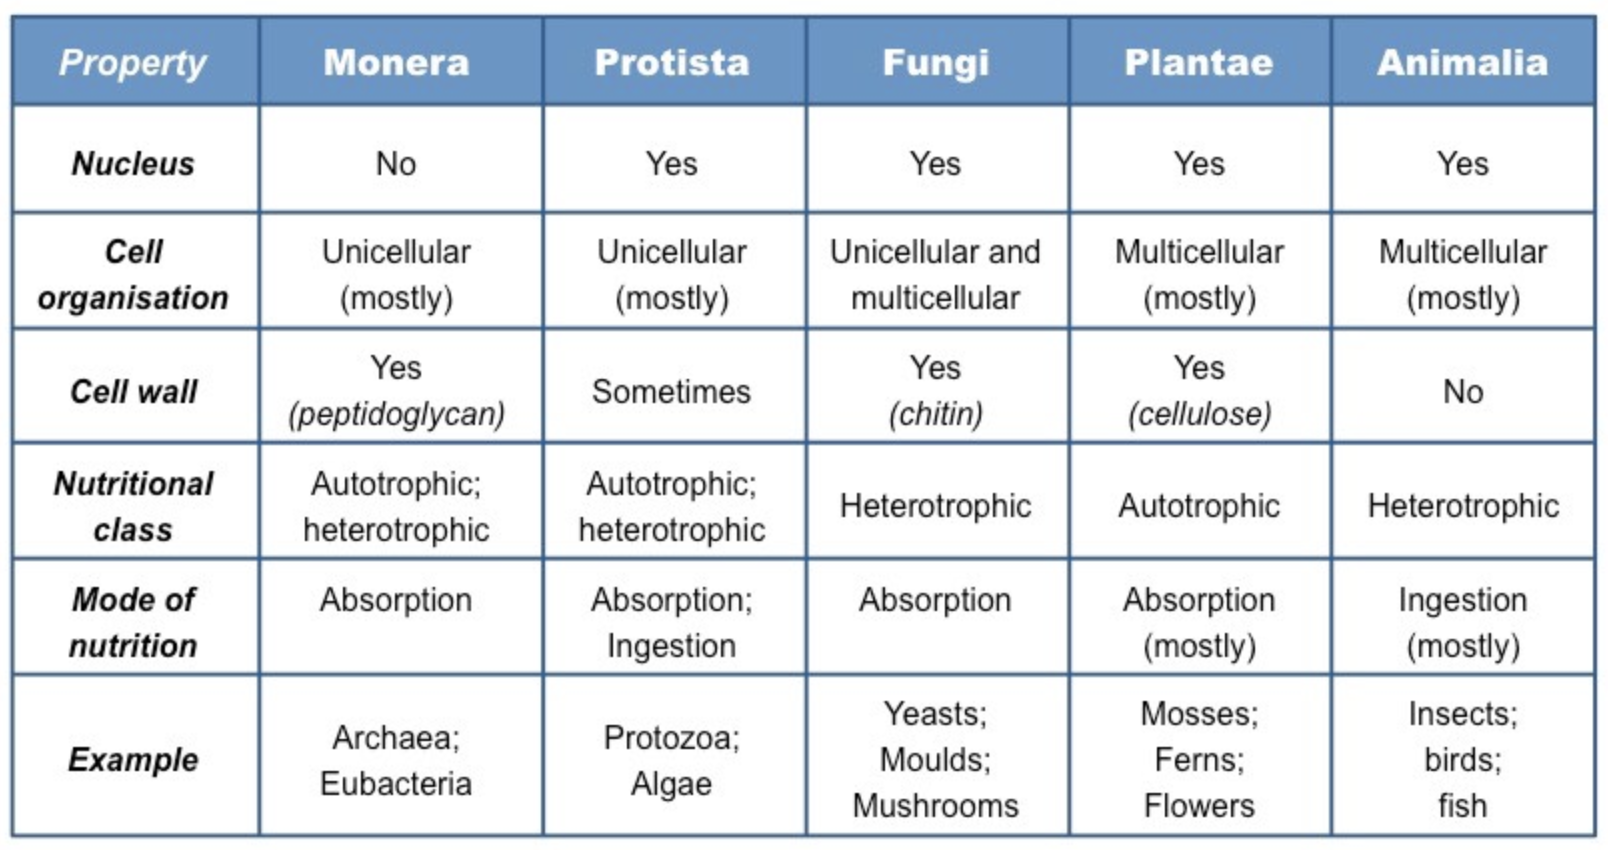 <p><u>Prokaryotes:</u></p><p><strong>Kingdom</strong> - Monera</p><p><strong>Domains - </strong>Archaea and Eubacteria</p><p><u>Eukaryotes:</u></p><p><strong>Kingdom - </strong>Eukarya</p><p><strong>Domains</strong> - Protist, Plant, Fungi, and Animal</p><p></p>